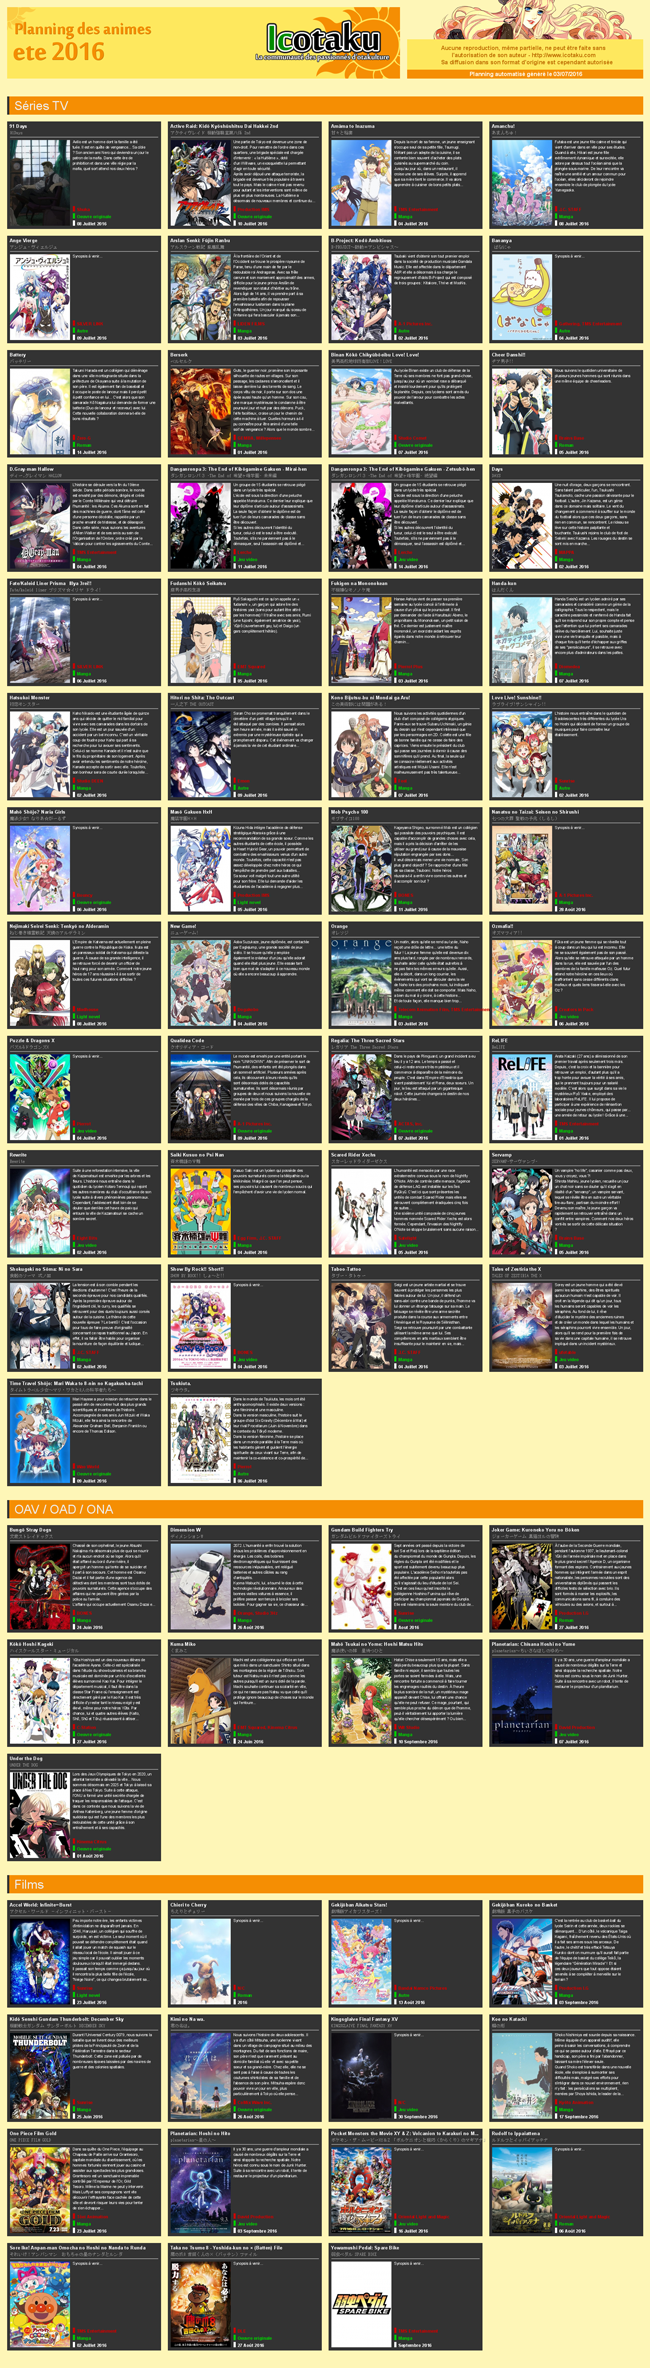 http://forum.icotaku.com/images/forum/plannings/ete2016/planning_anime_ete_2016_mini.png